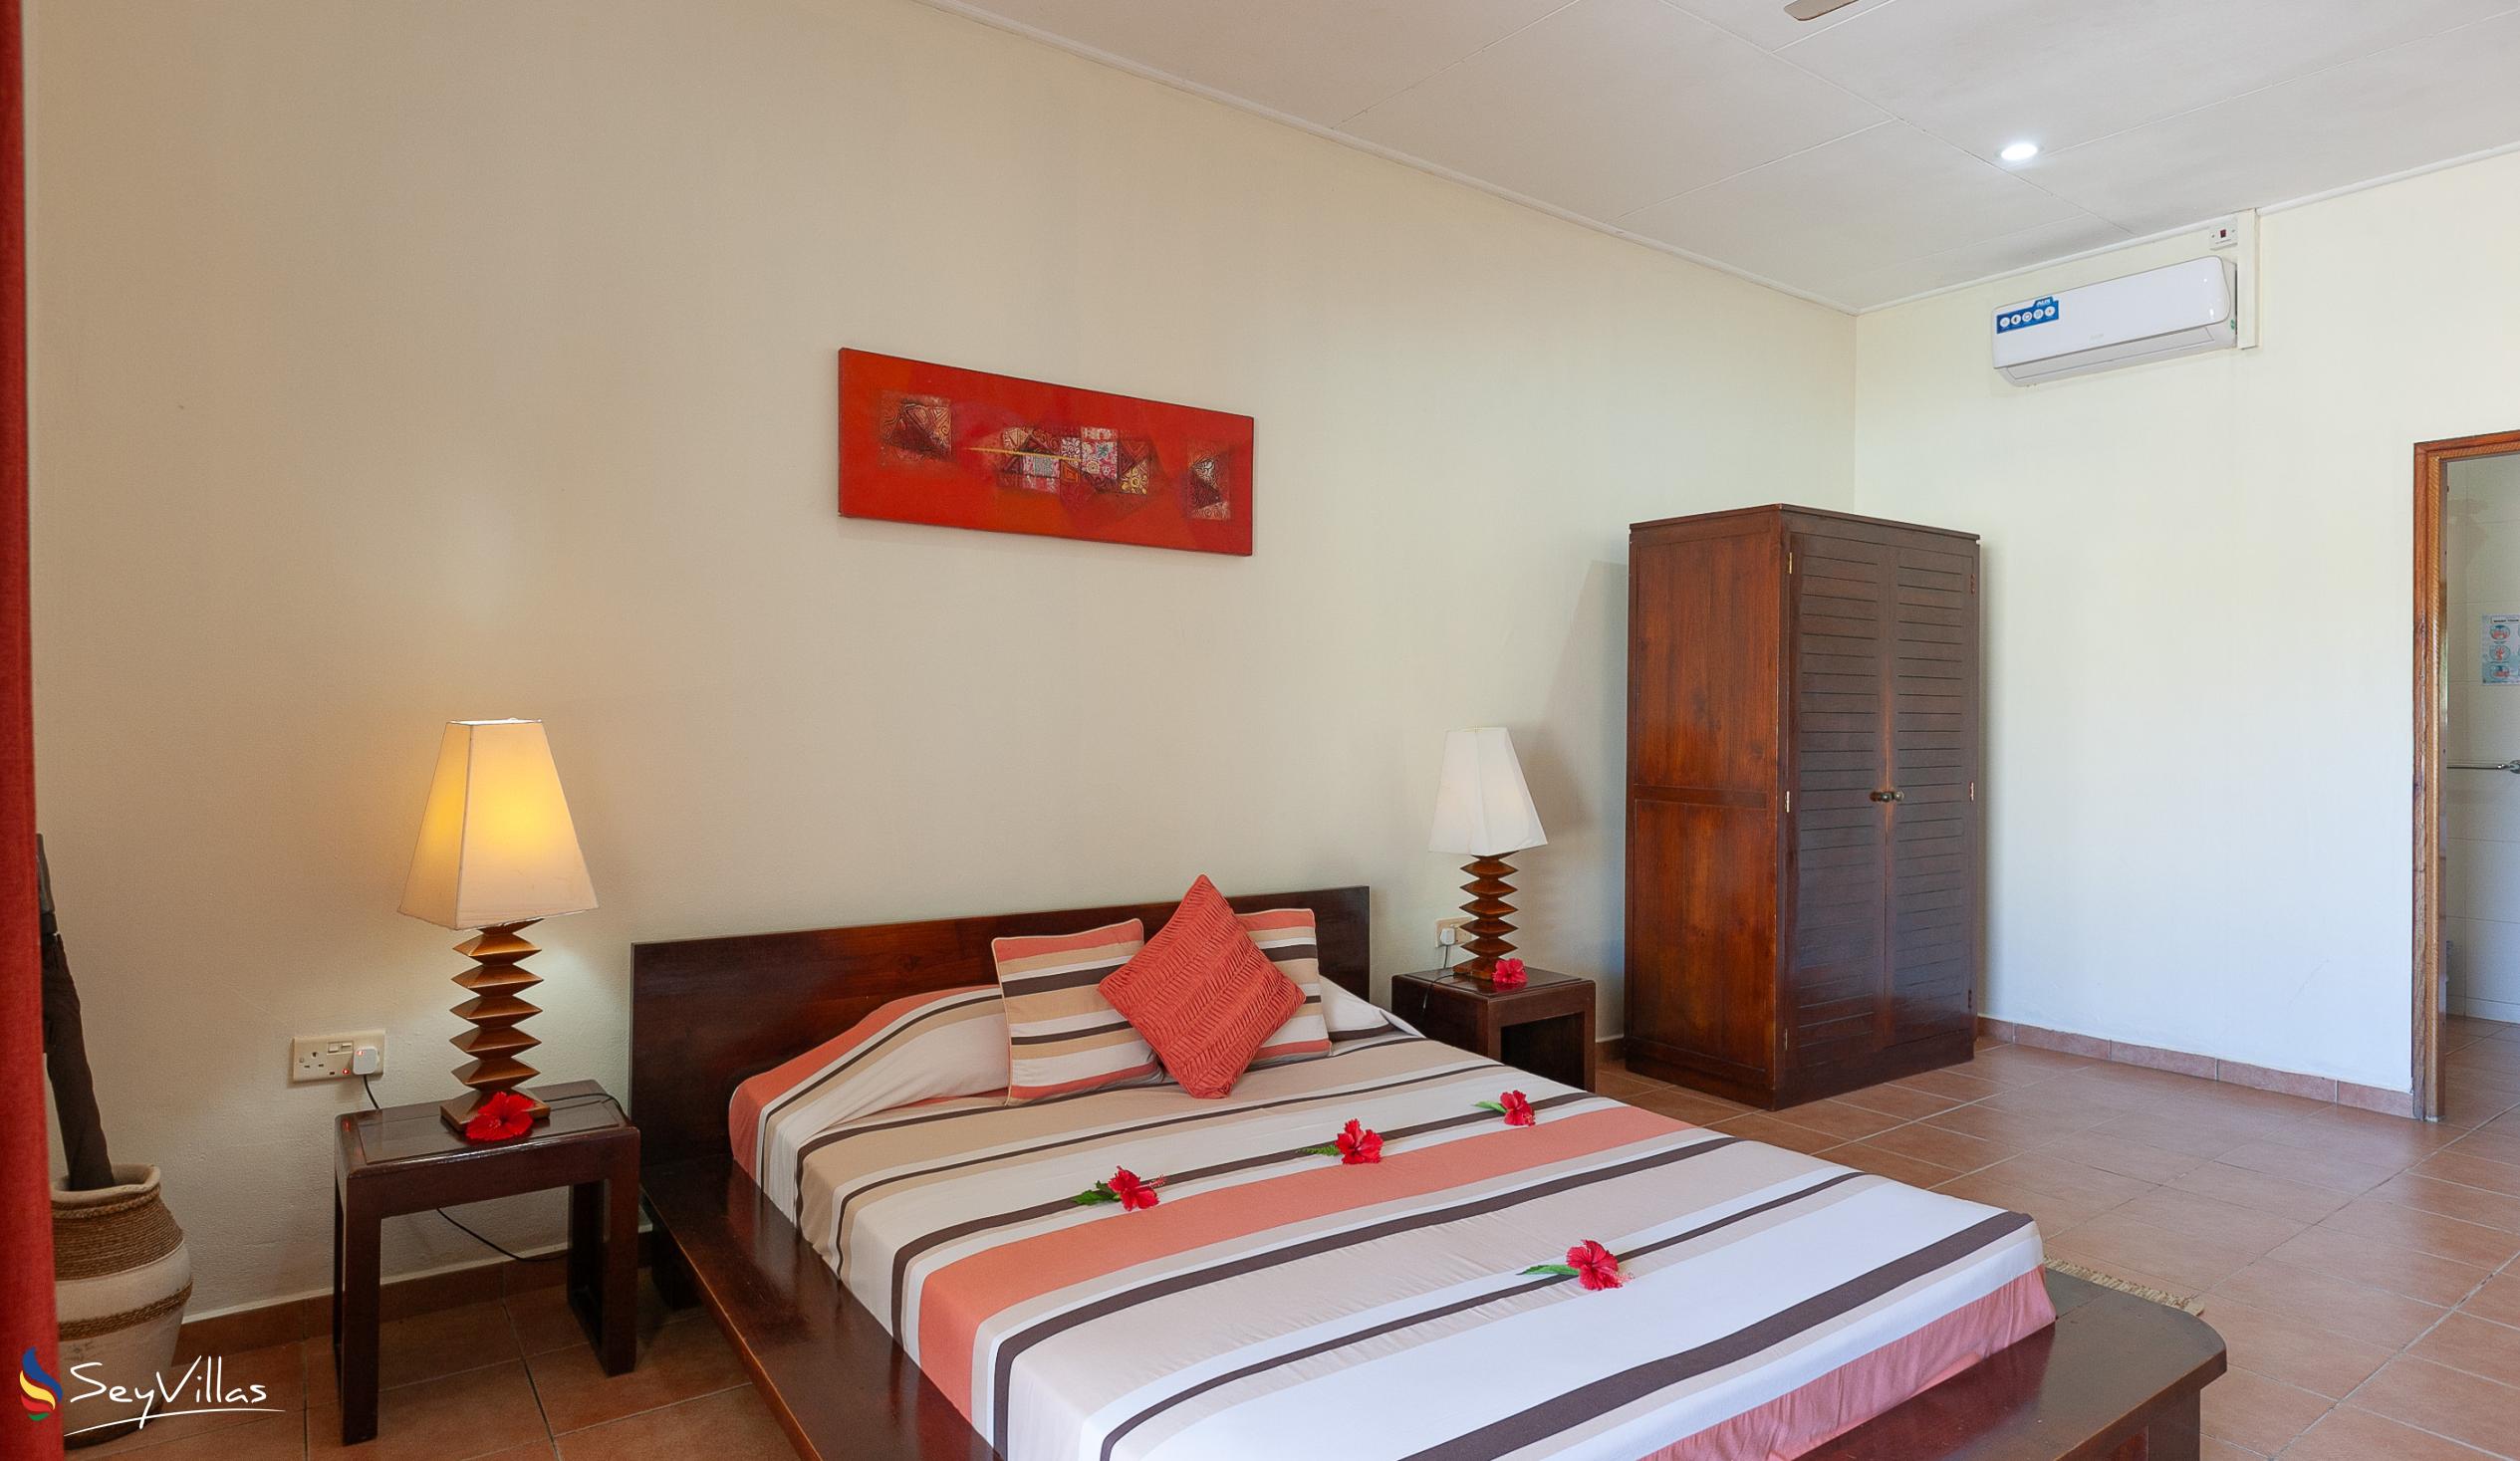 Photo 43: Britannia Hotel - Superior Family Room - Praslin (Seychelles)